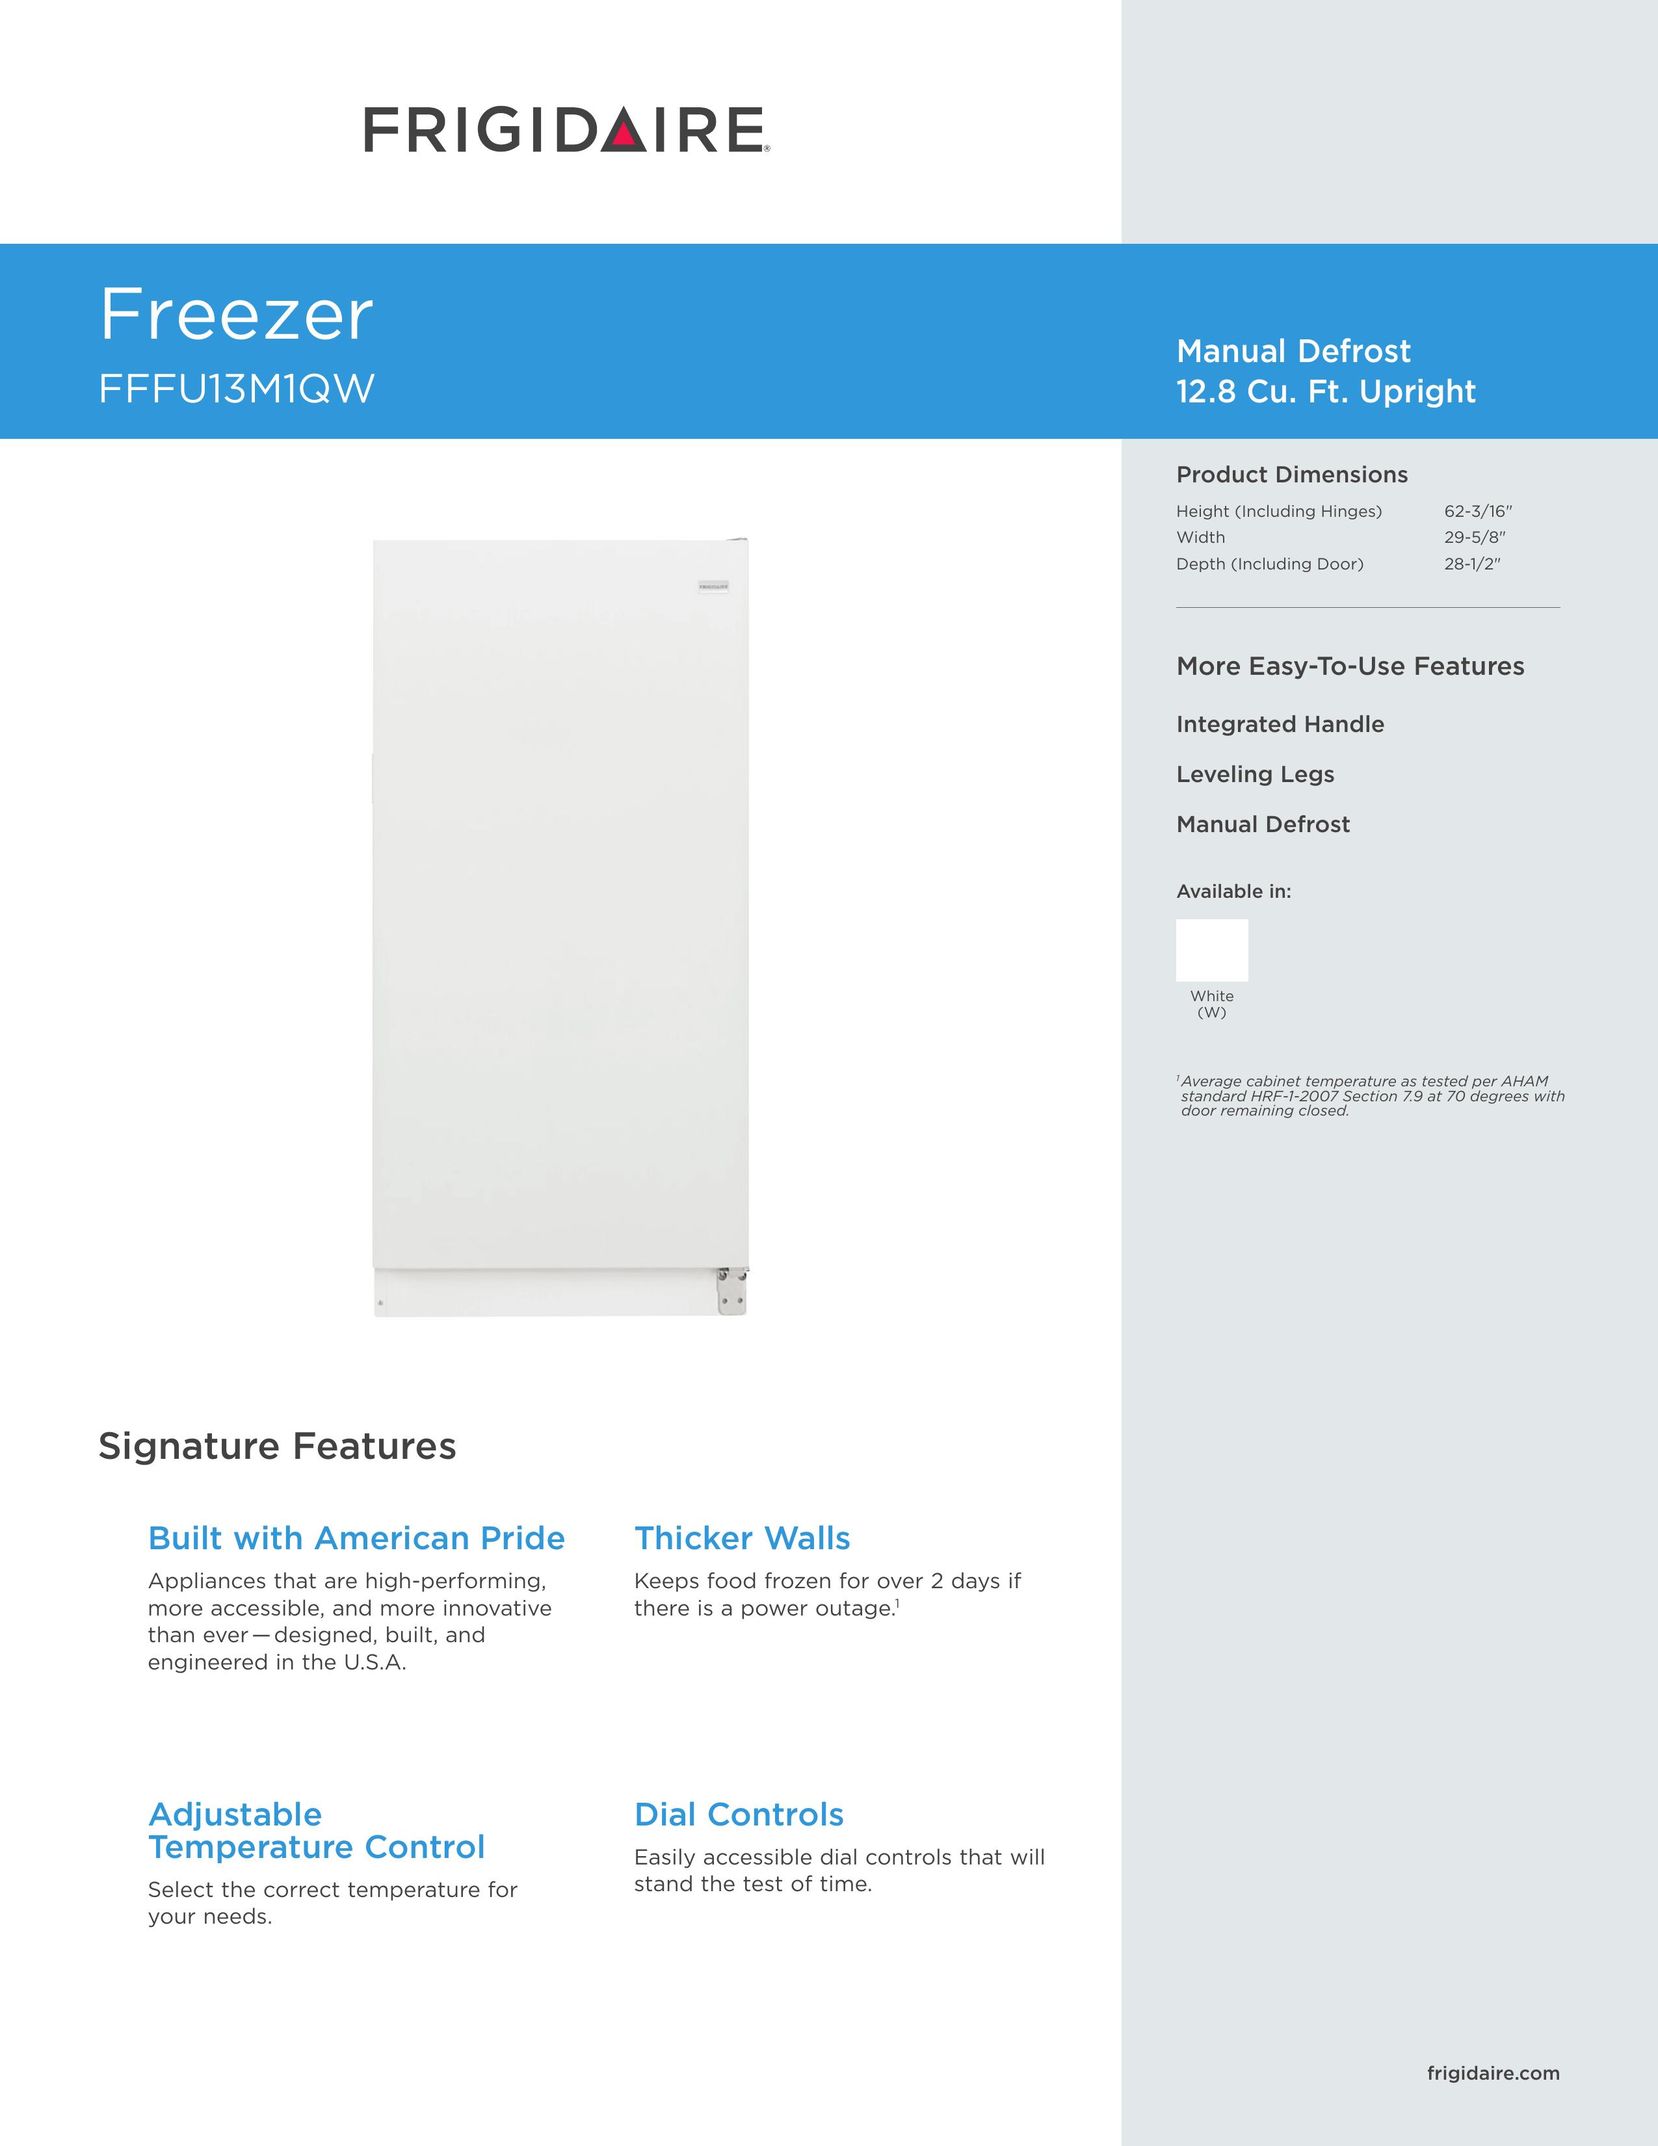 Frigidaire FFFU13M1QW Freezer User Manual